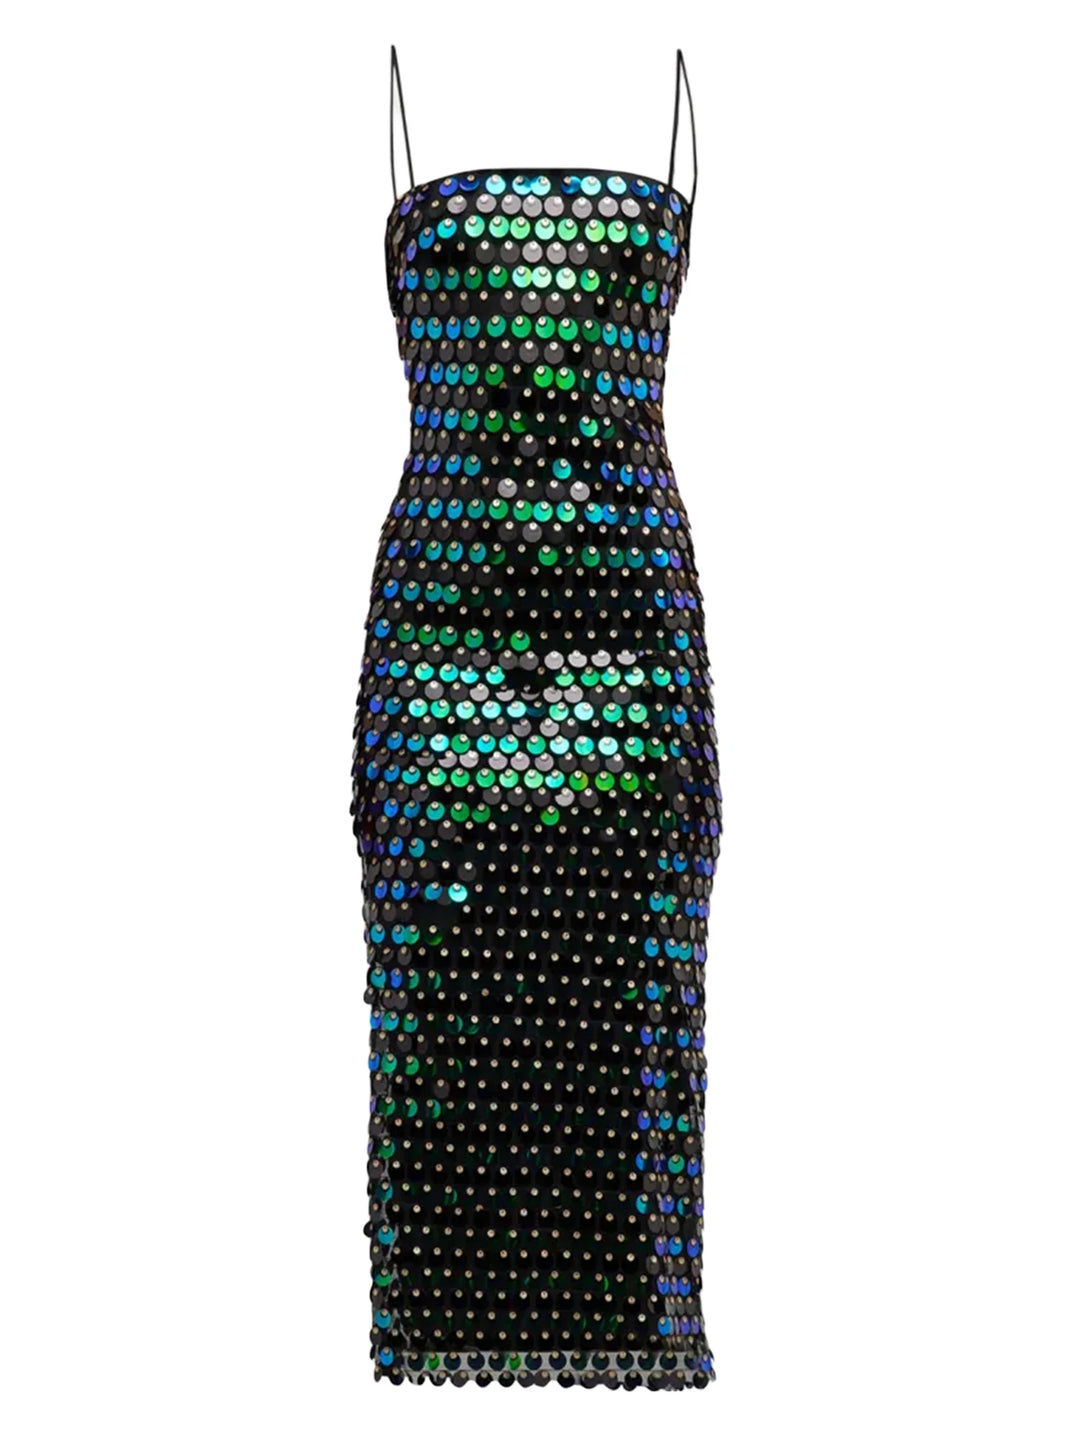 Sequin Skinny Long Dress - Divawearfashion